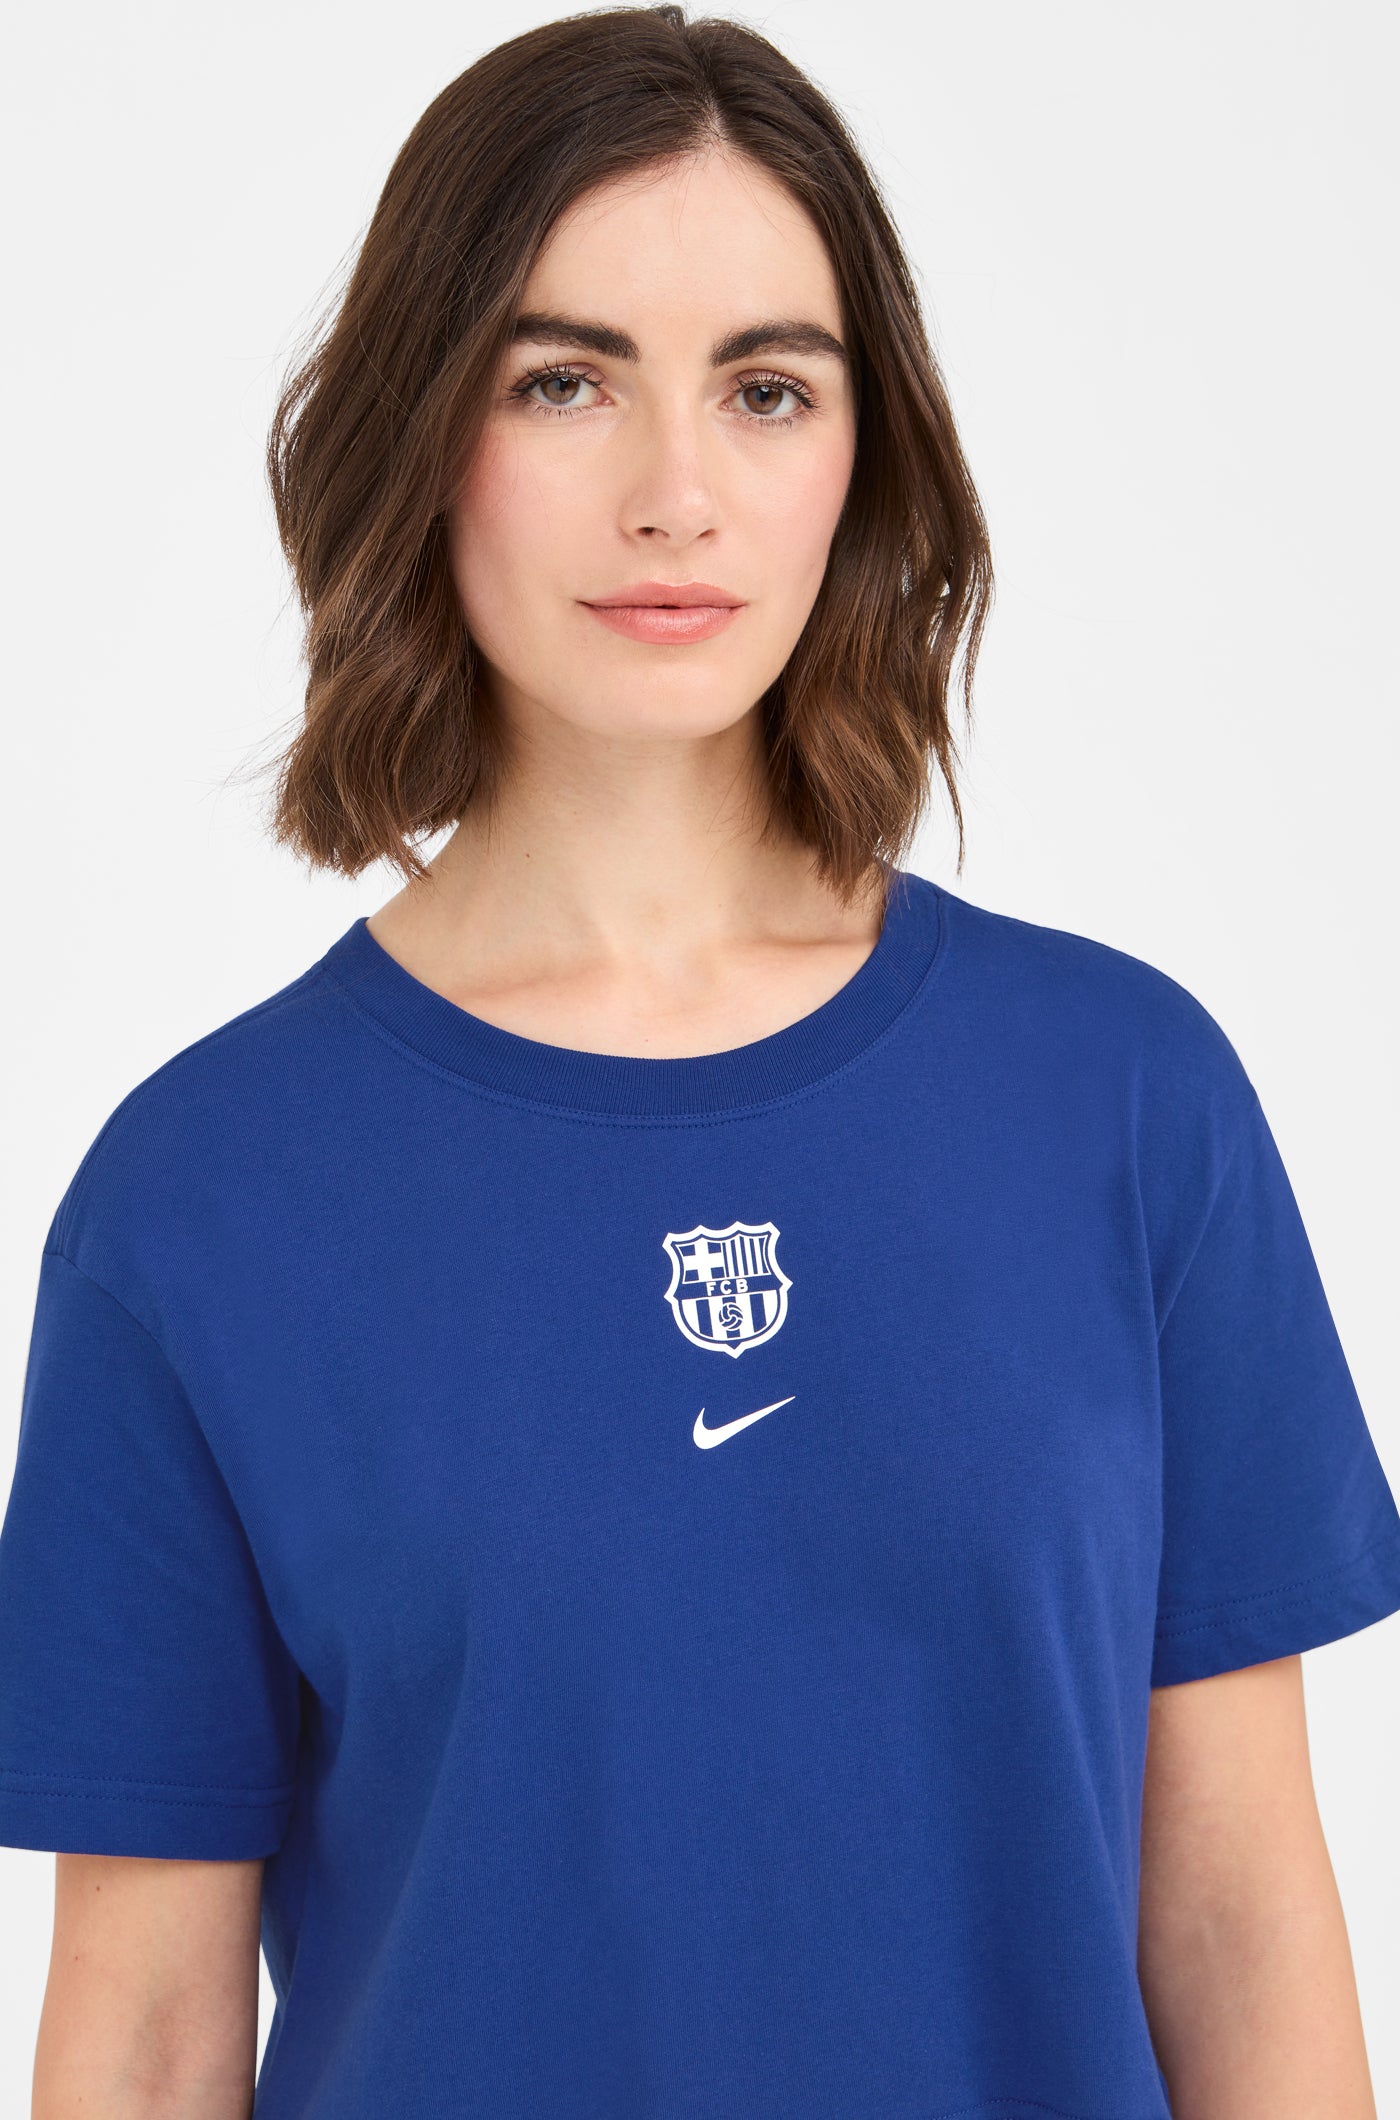 Crop top écusson bleu Barça Nike - Femme